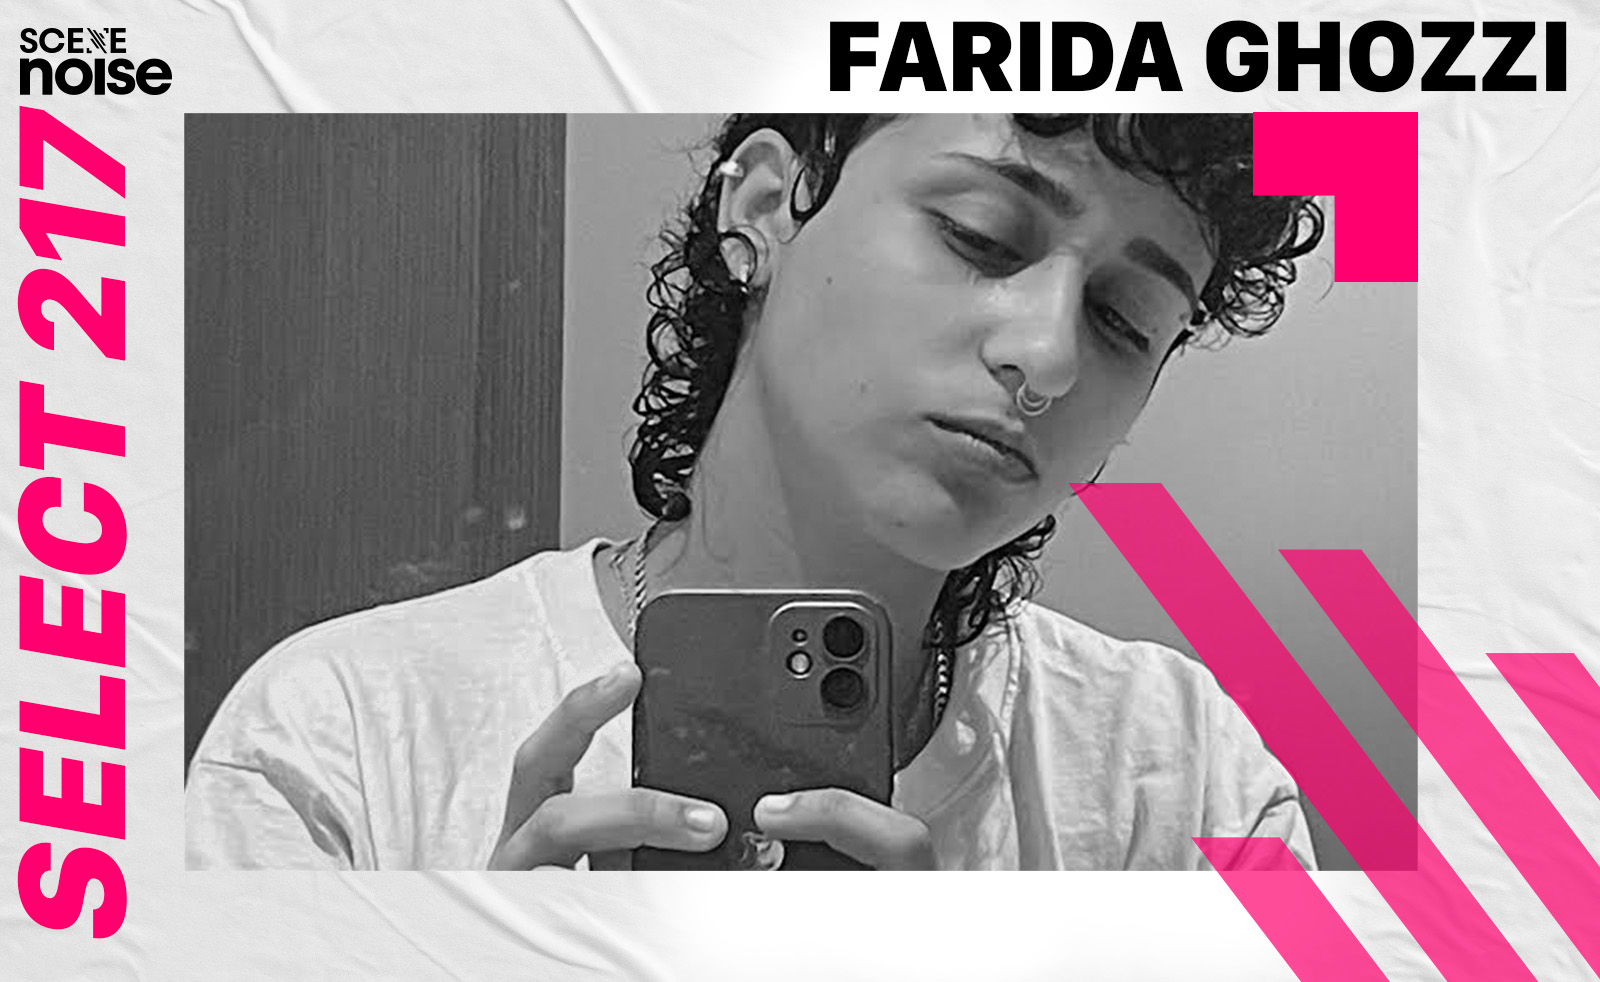 Select 217: Mixed by Farida Ghozzi